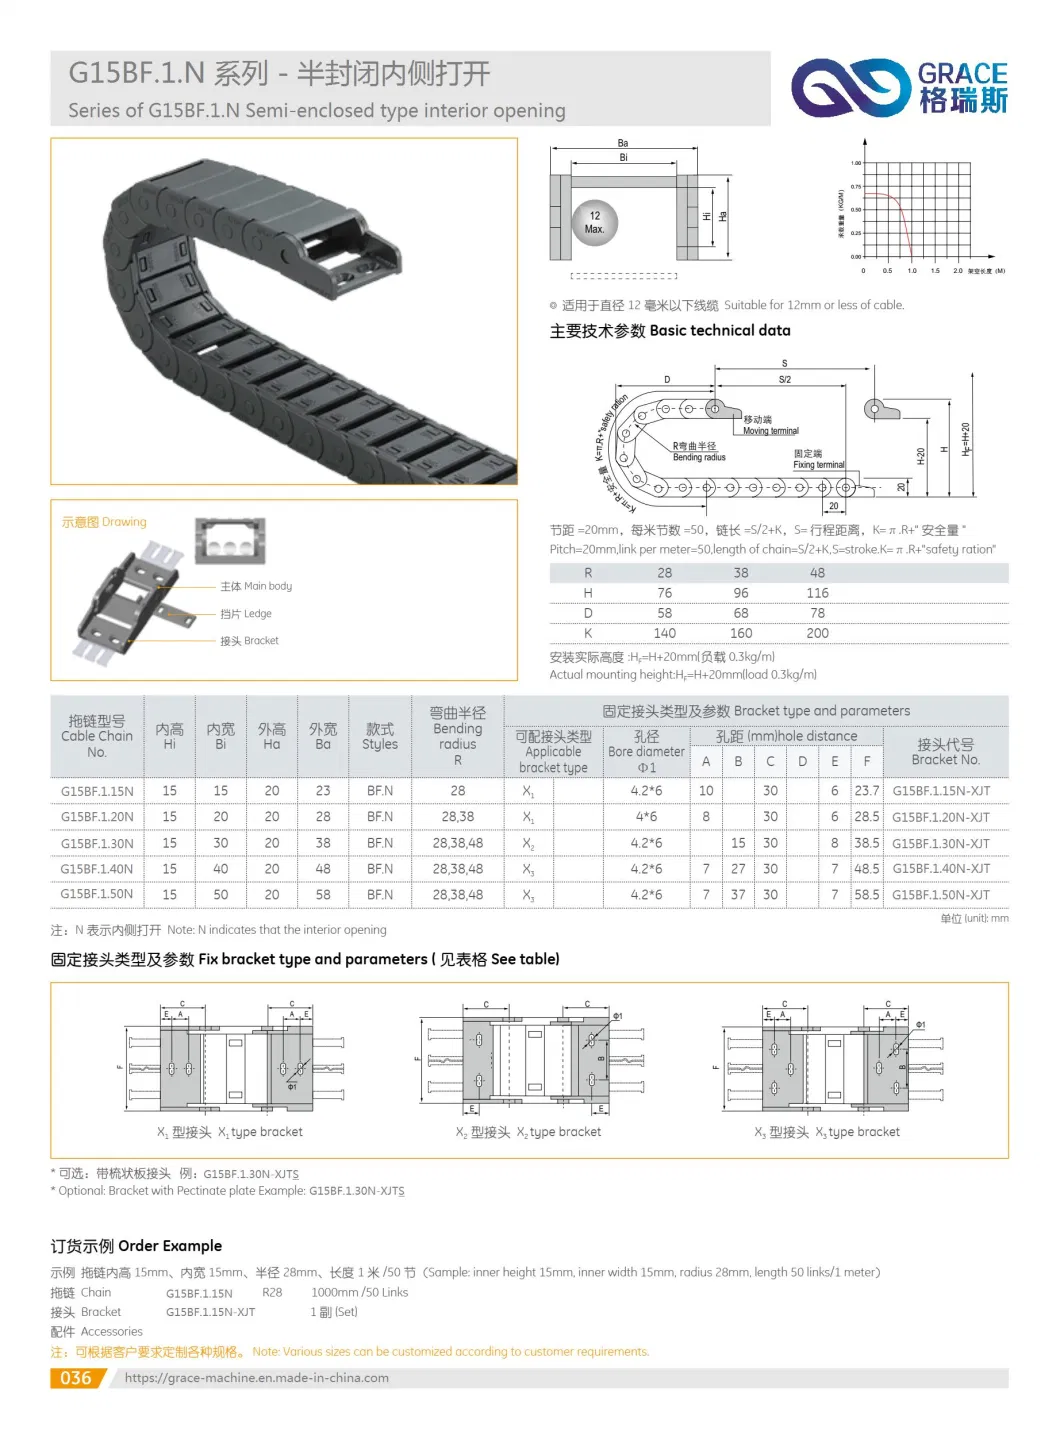 Black Plastic Flexible Drag Chain for 3D Printer and CNC Machines